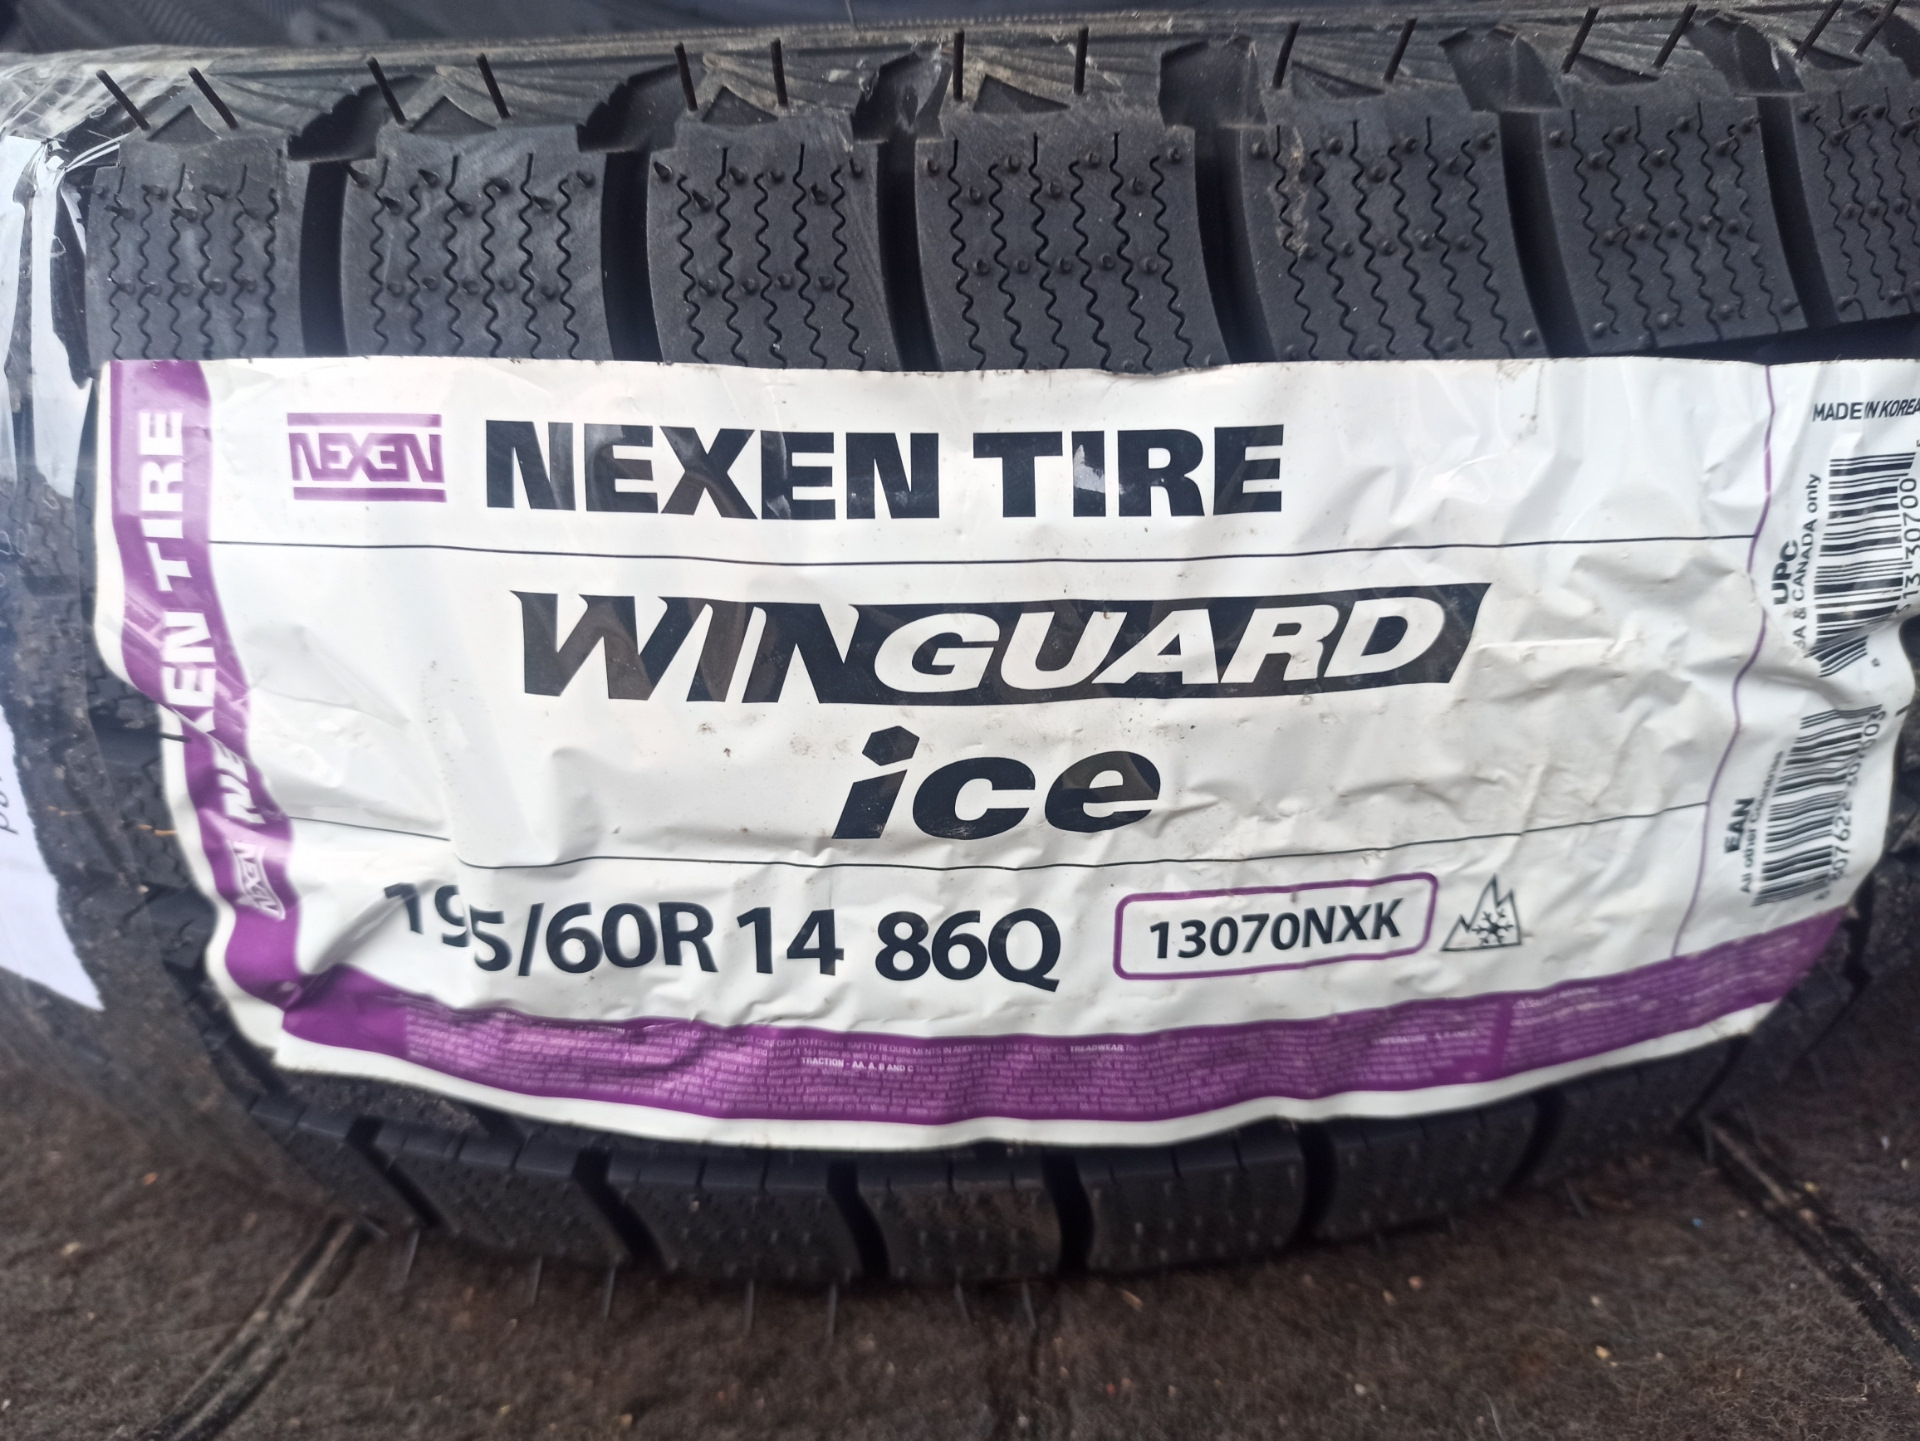 Nexen шины страна производитель для россии. Nexen 195 70 14. Резина на Газель Nexen. Nexen Winguard Ice 86q. Nexen Tire.